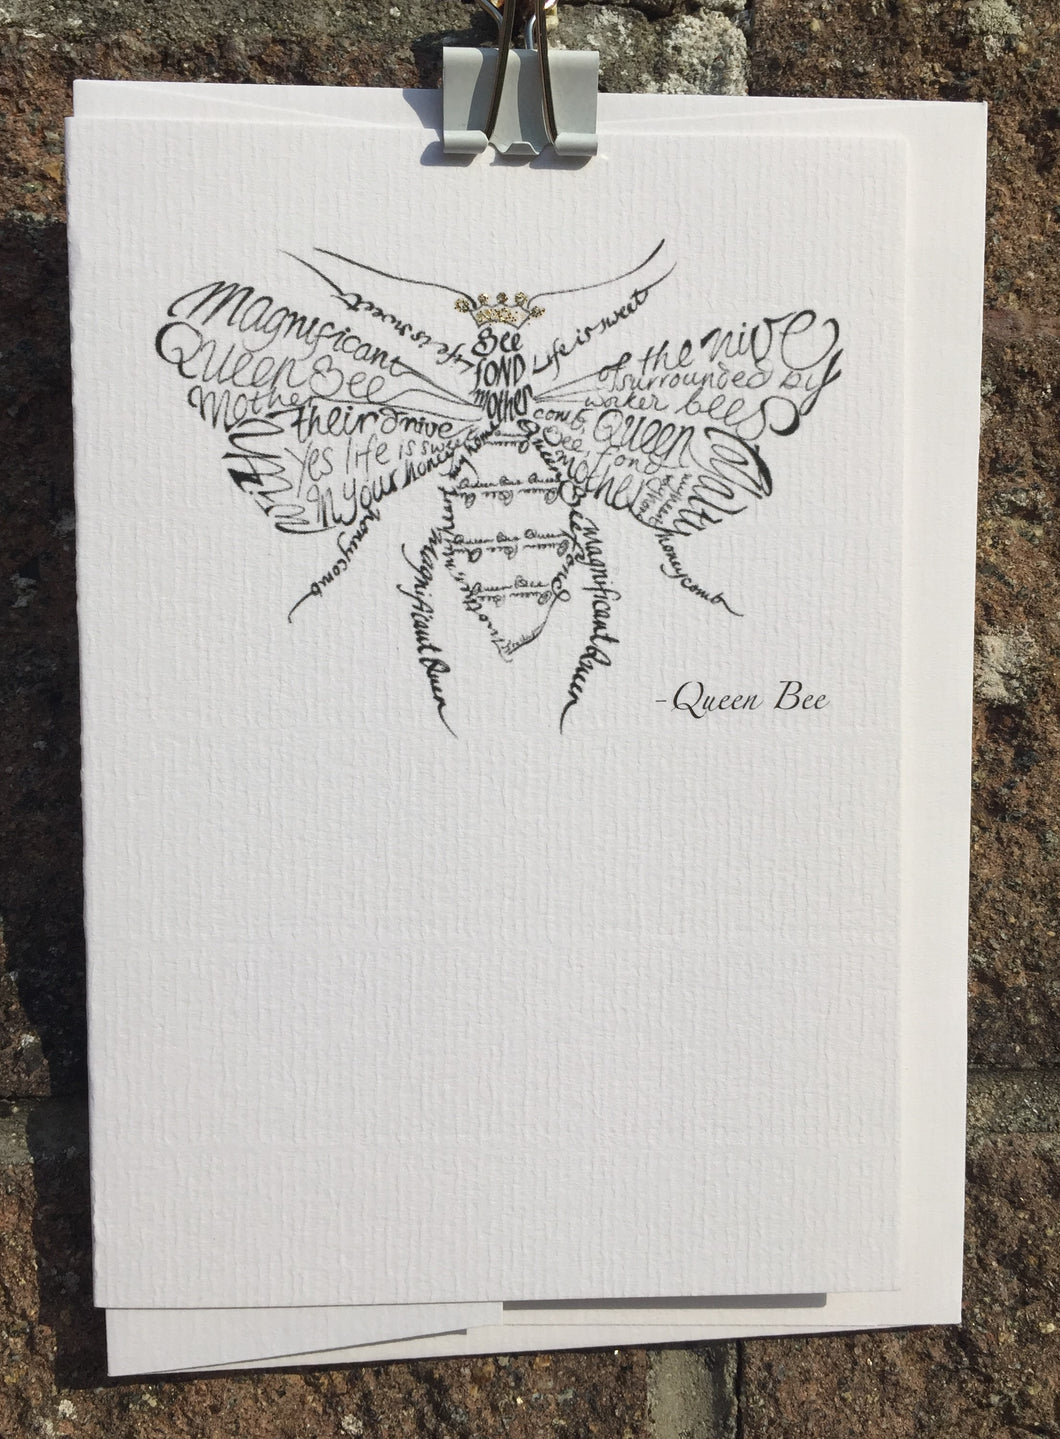 Queen Bee - Calligraphette, byFrolly